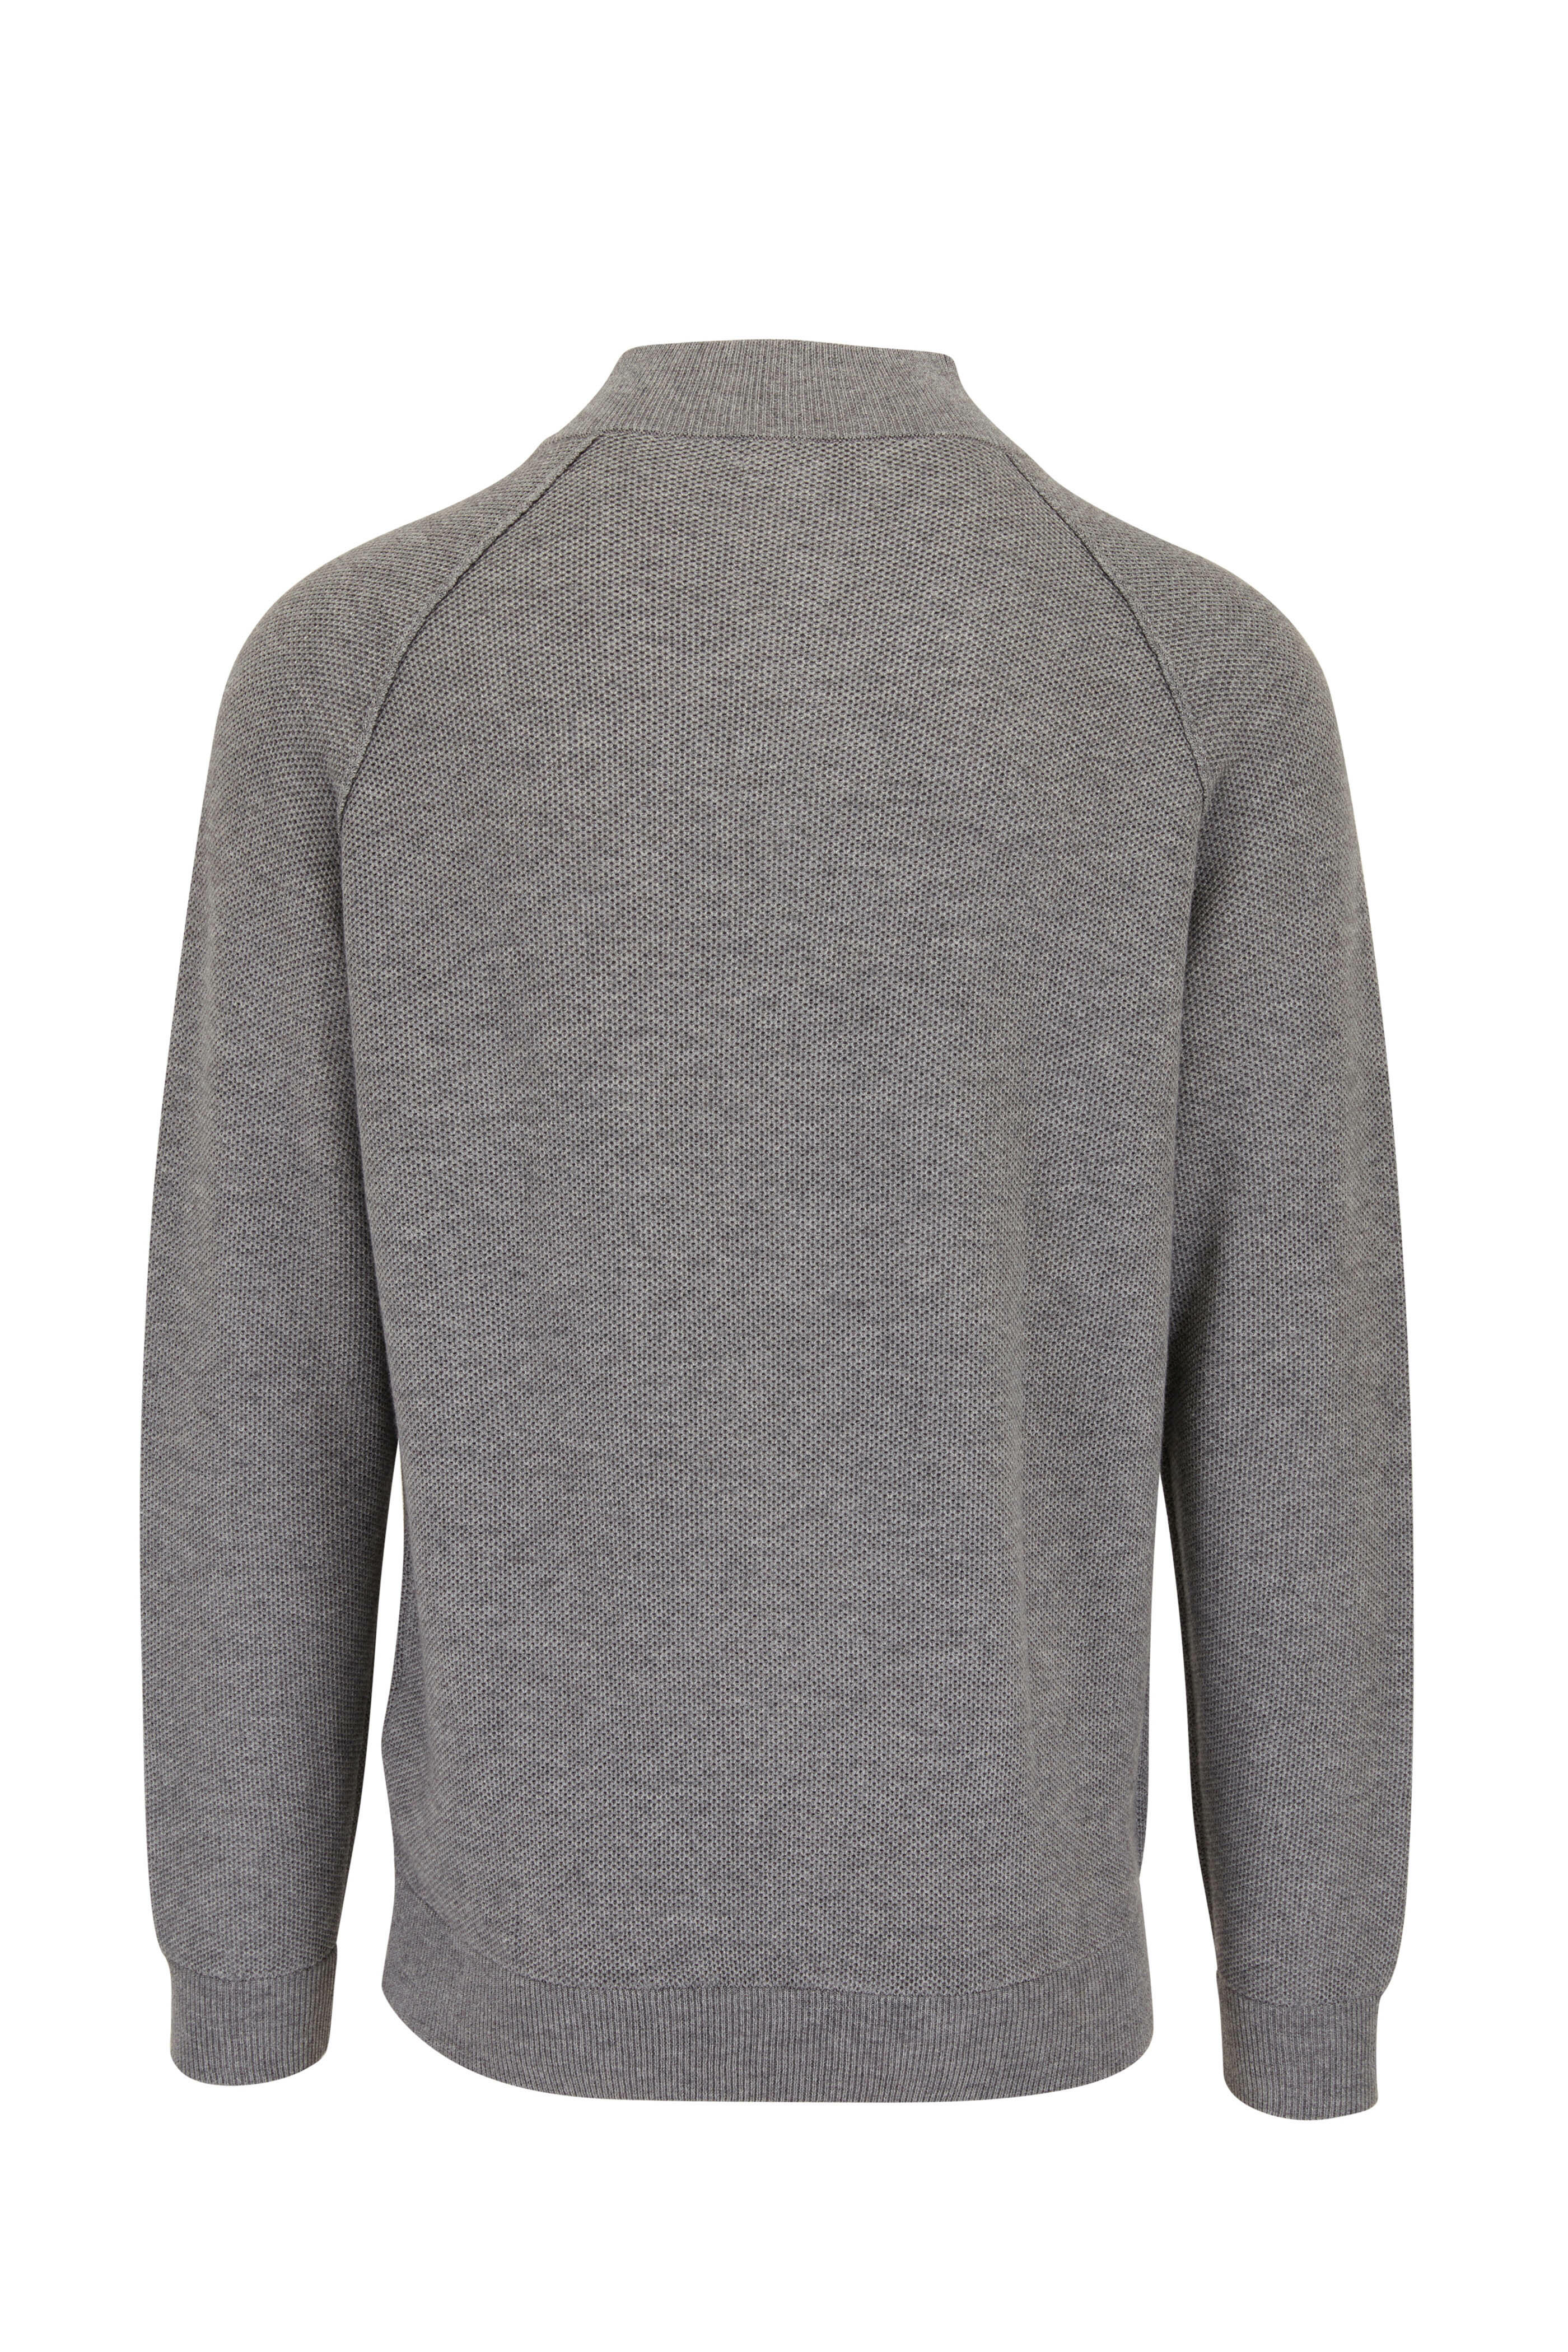 Peter Millar - Parkway Gale Gray Textured Mock-Neck Sweater